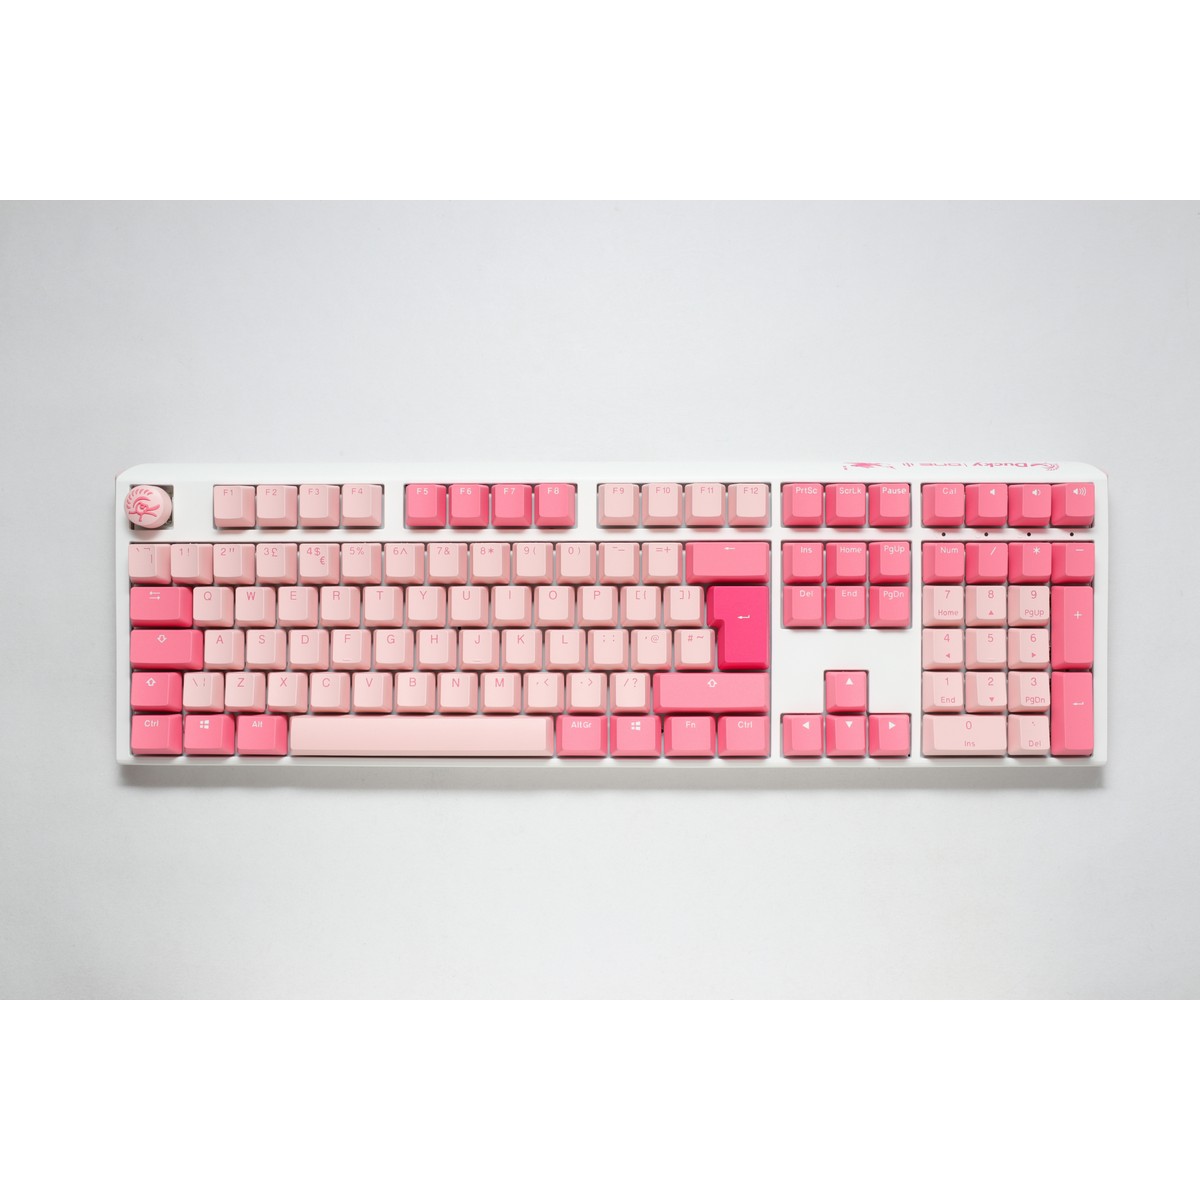 Ducky - Ducky One 3 Gossamer Pink USB Cherry MX Blue Mechanical Gaming Keyboard UK Layou